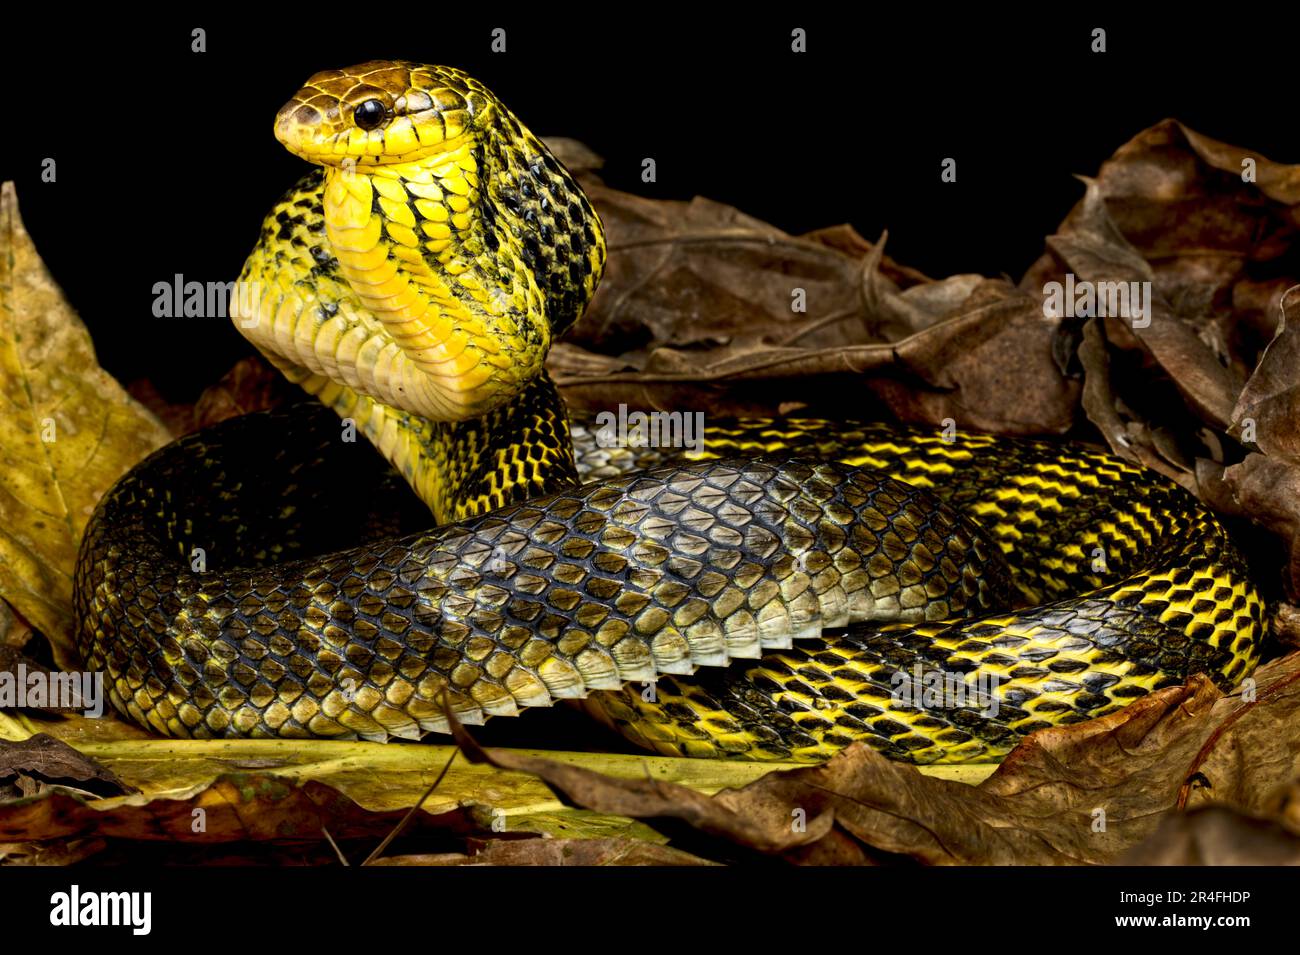 Yellow-bellied puffing snake (Pseustes sulphureus) Stock Photo